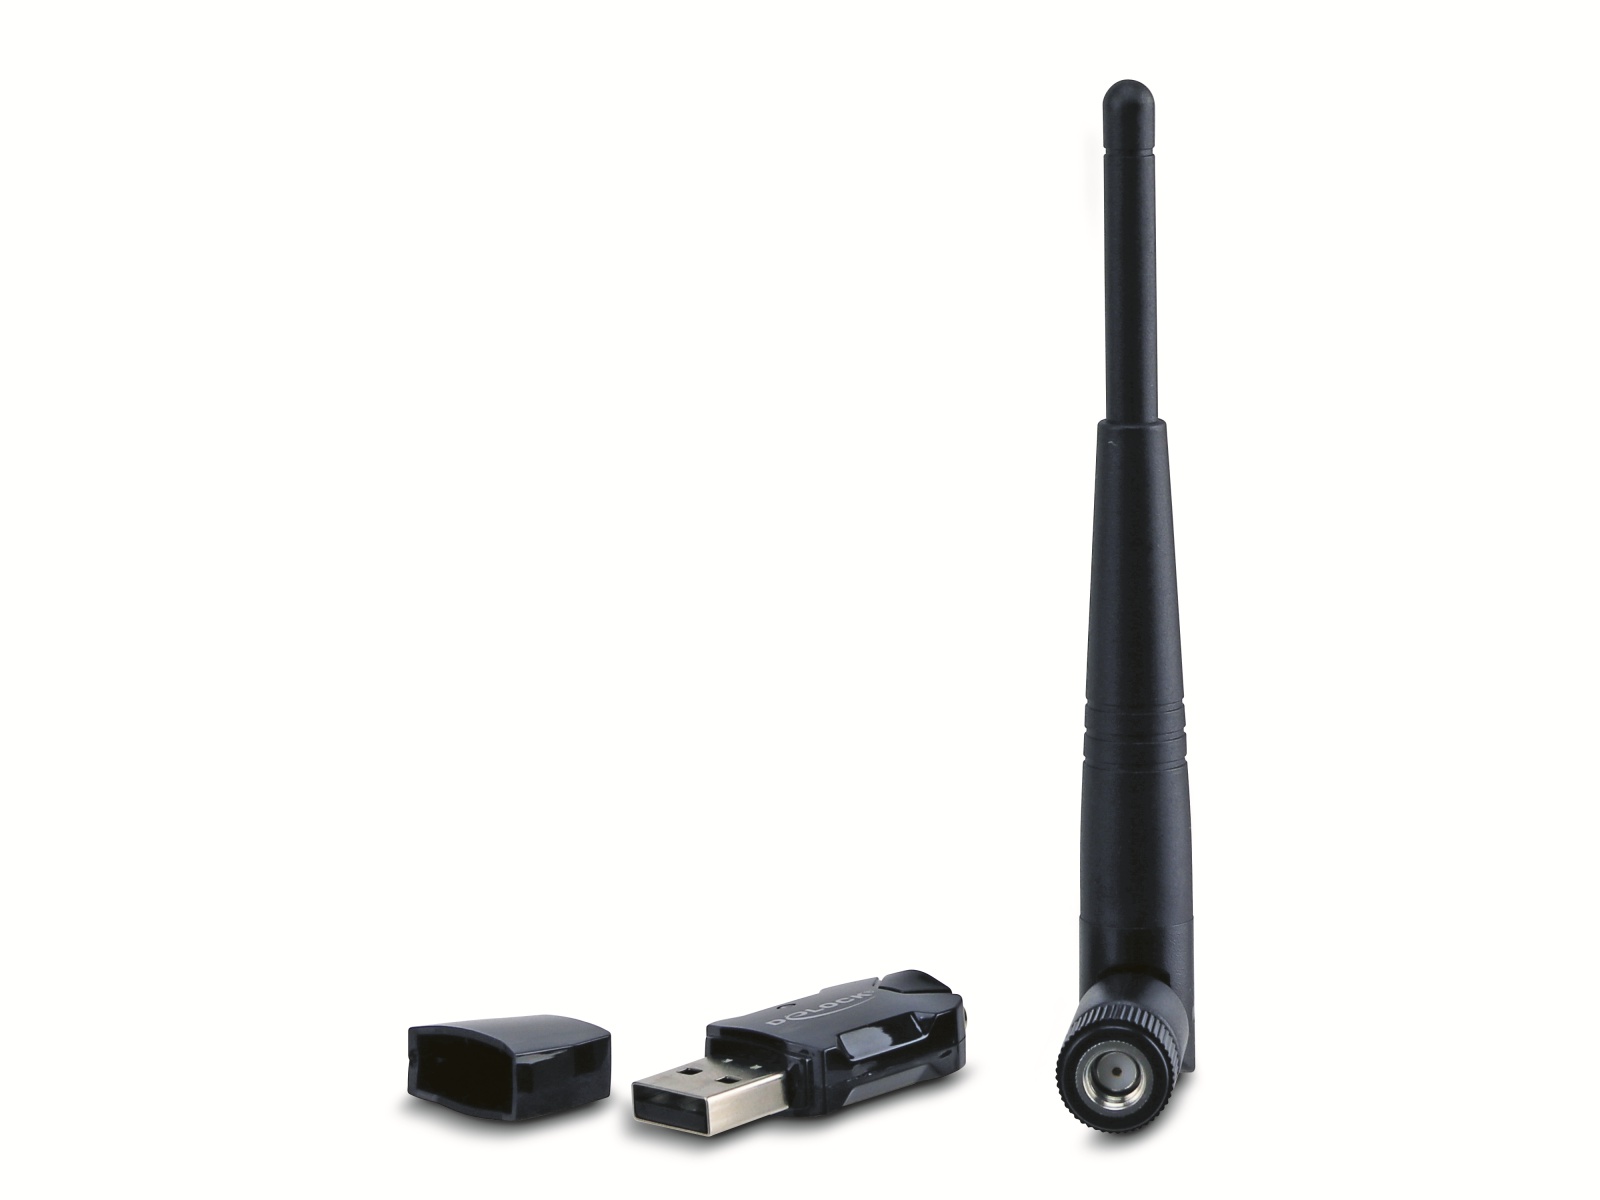 WLAN USB-Stick, DELOCK, 12462, 433Mbps, Antenne, 2,4Ghz/5Ghz